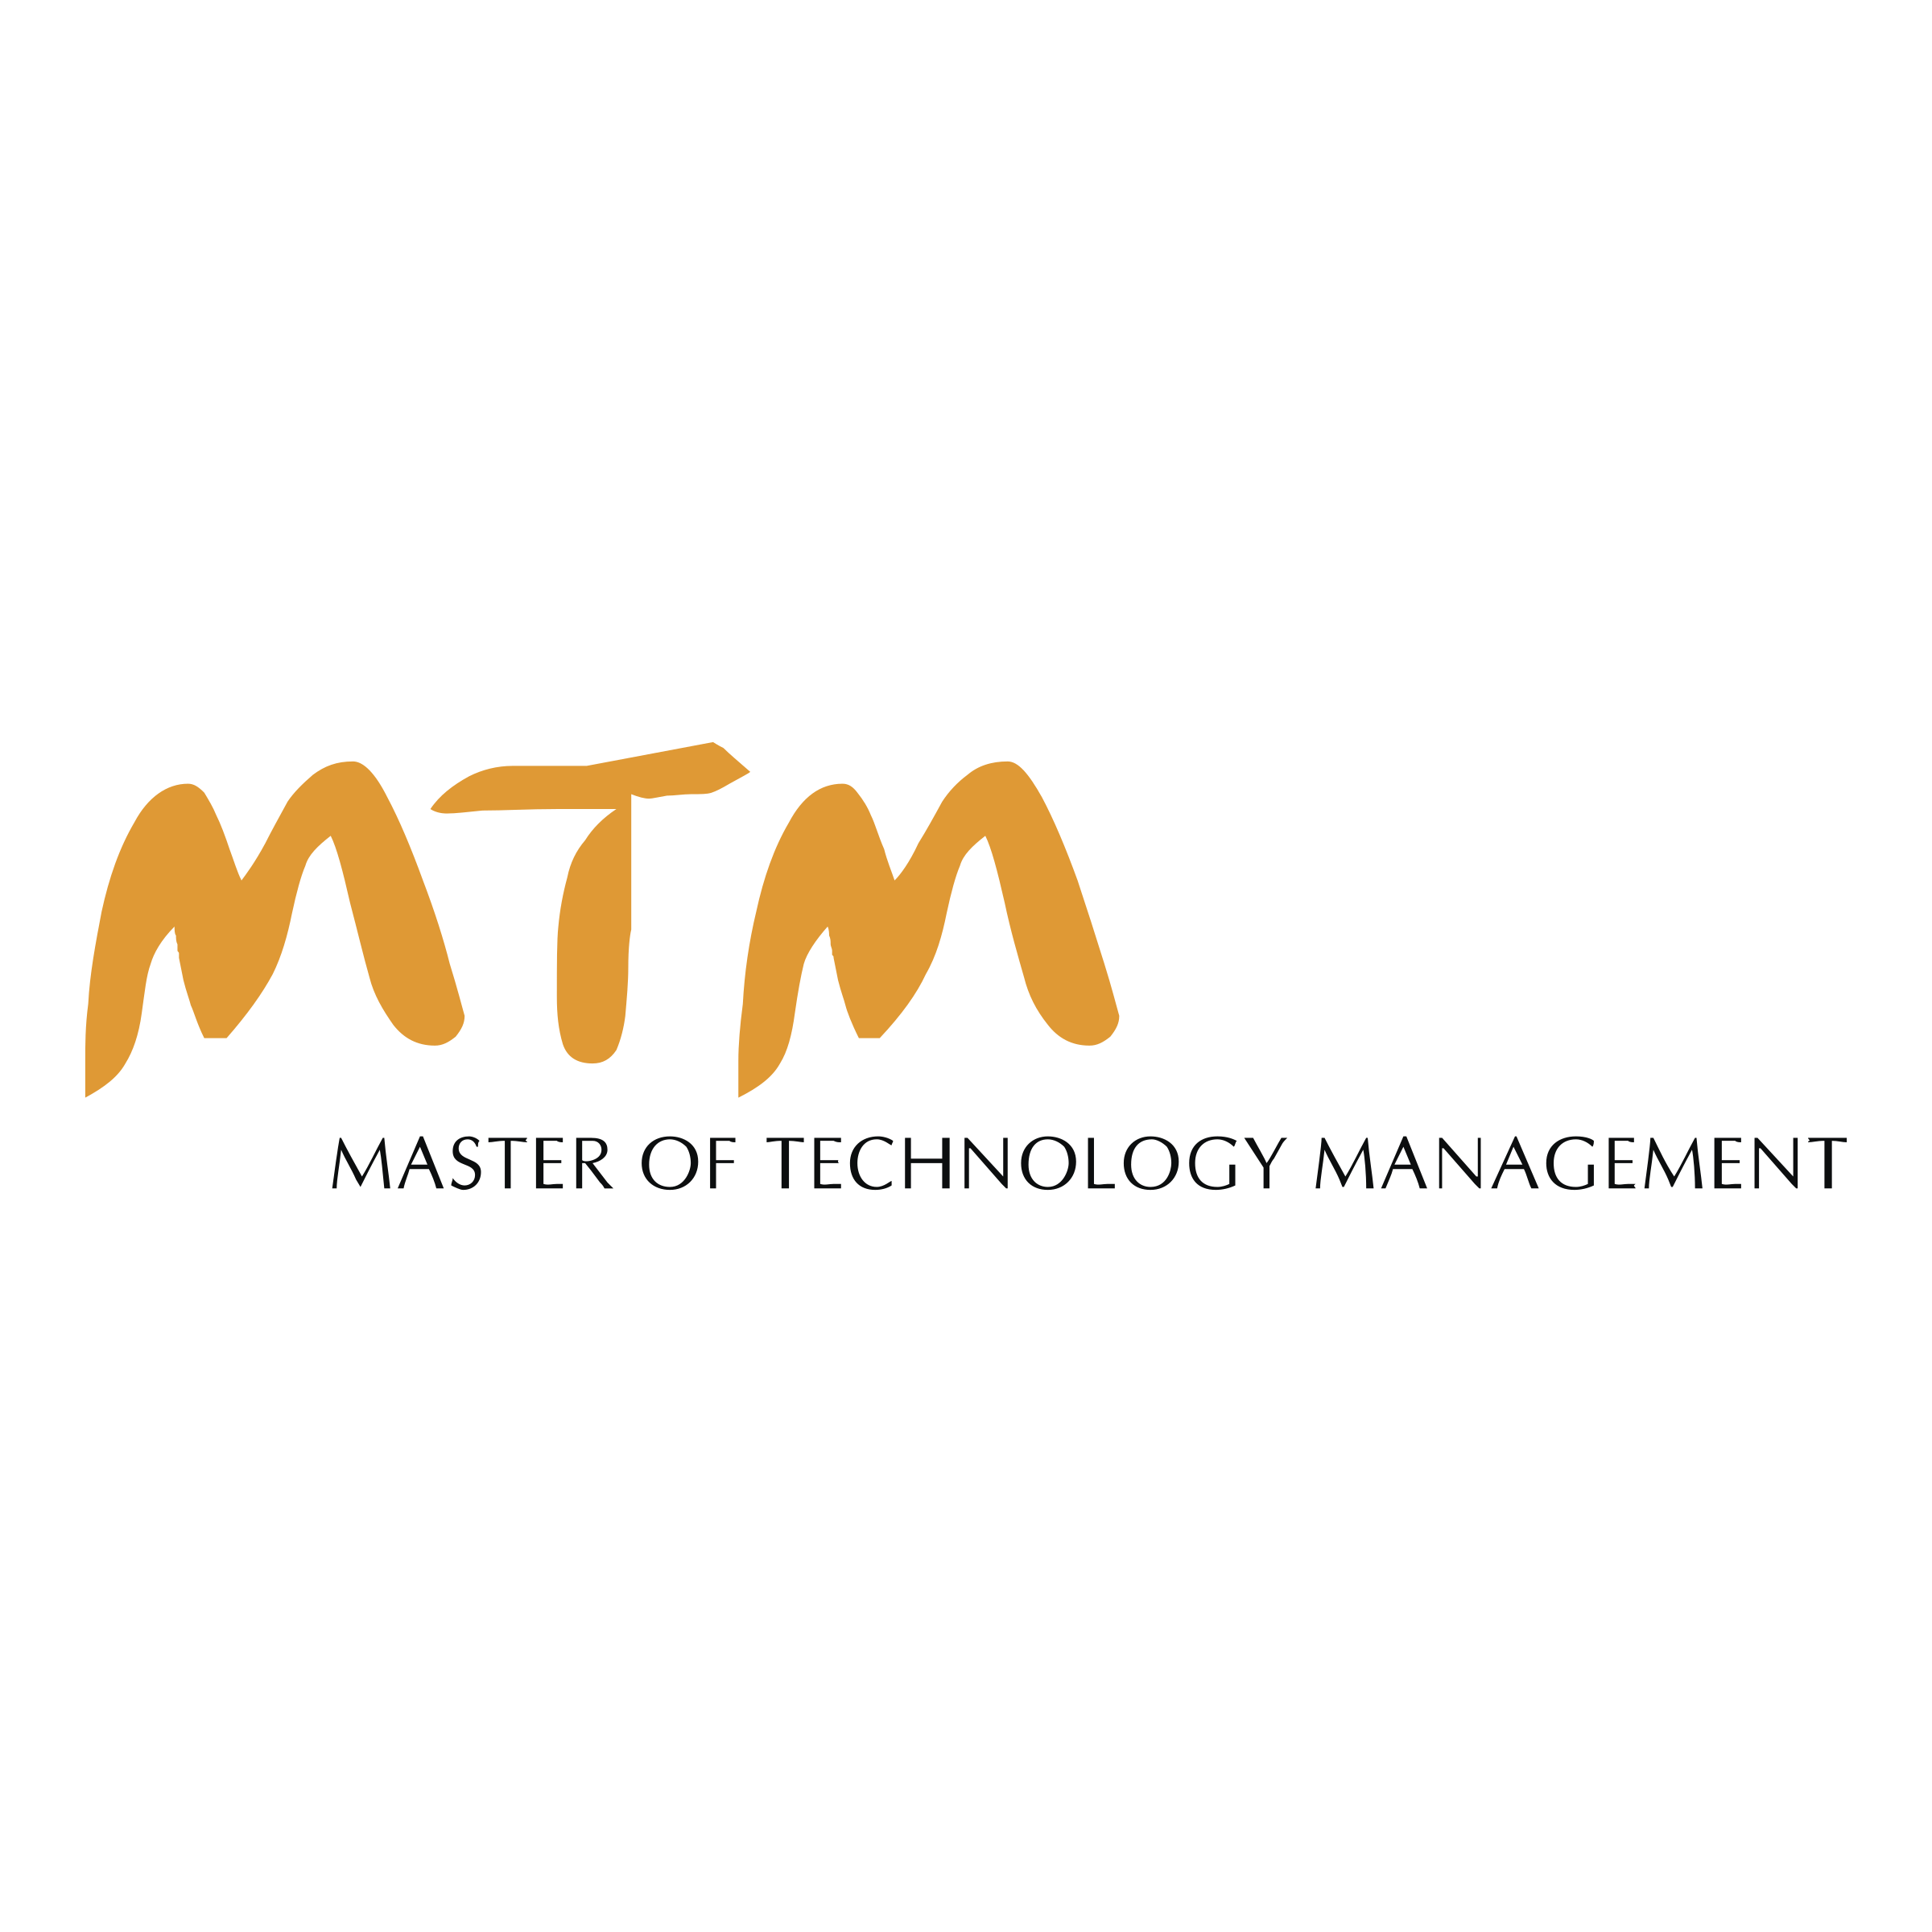 MTM Logo - MTM Logo PNG Transparent & SVG Vector - Freebie Supply